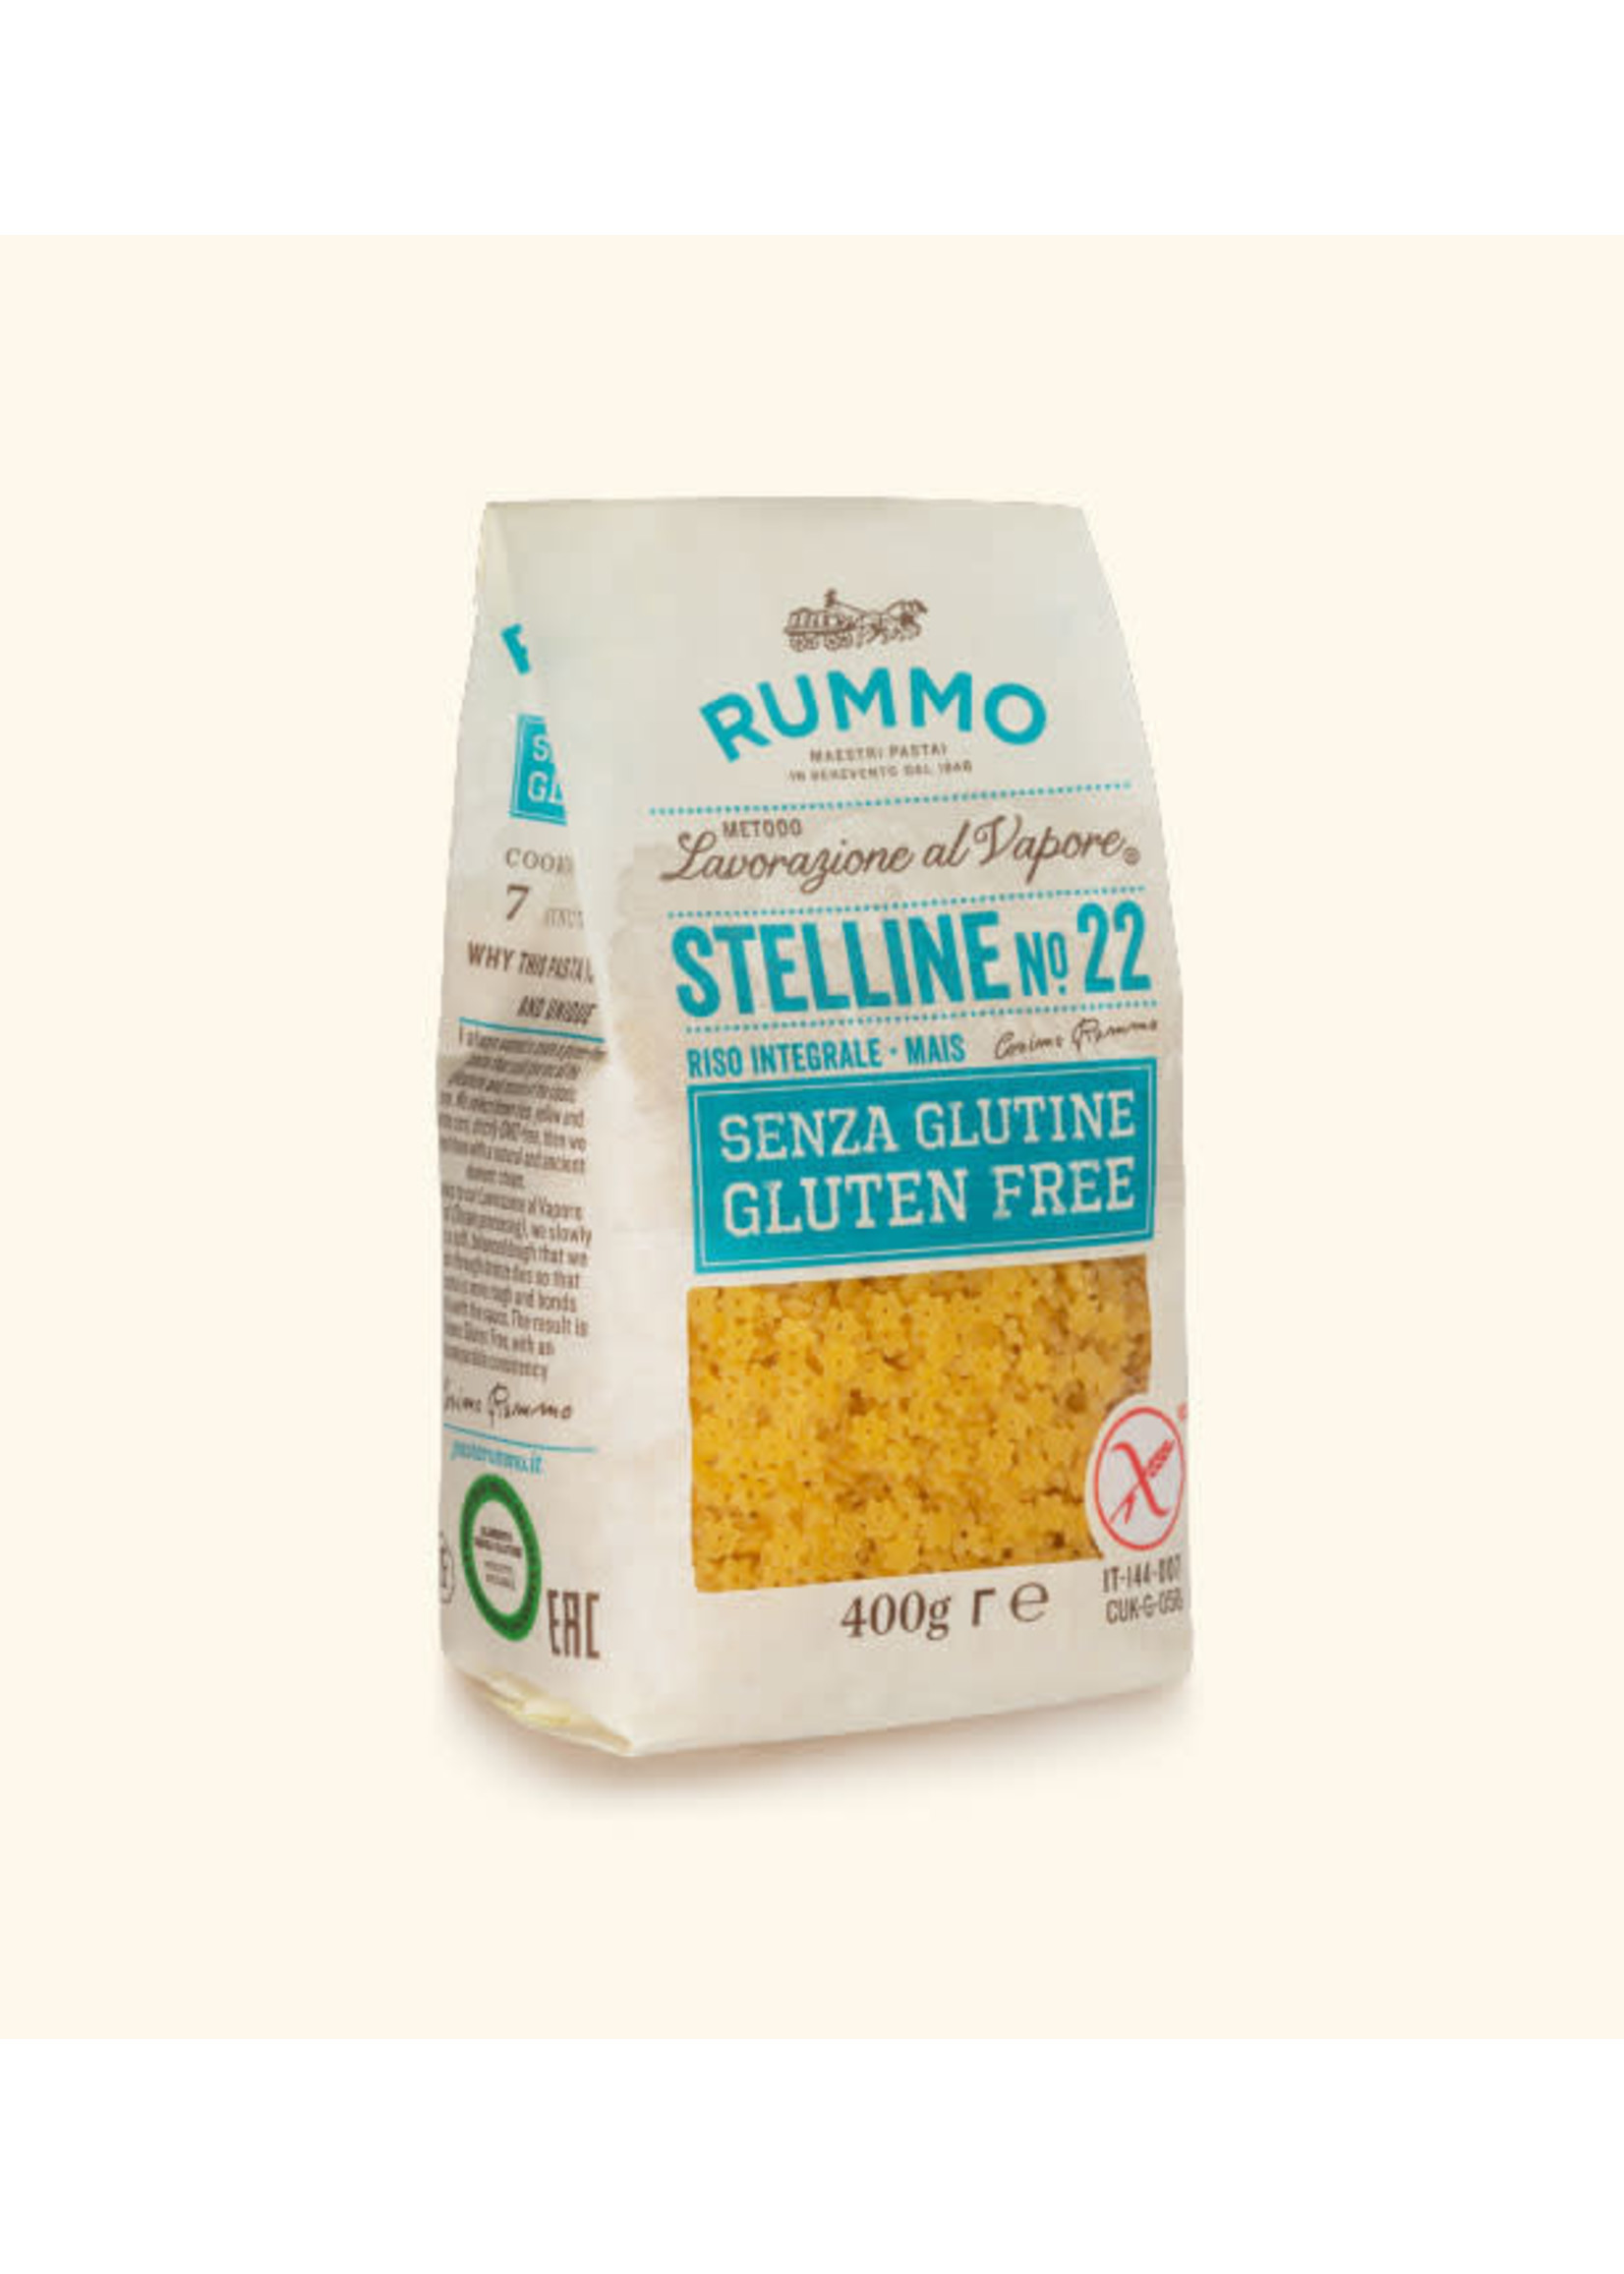 Rummo Pasta Gluten Free Rummo Stelline no22